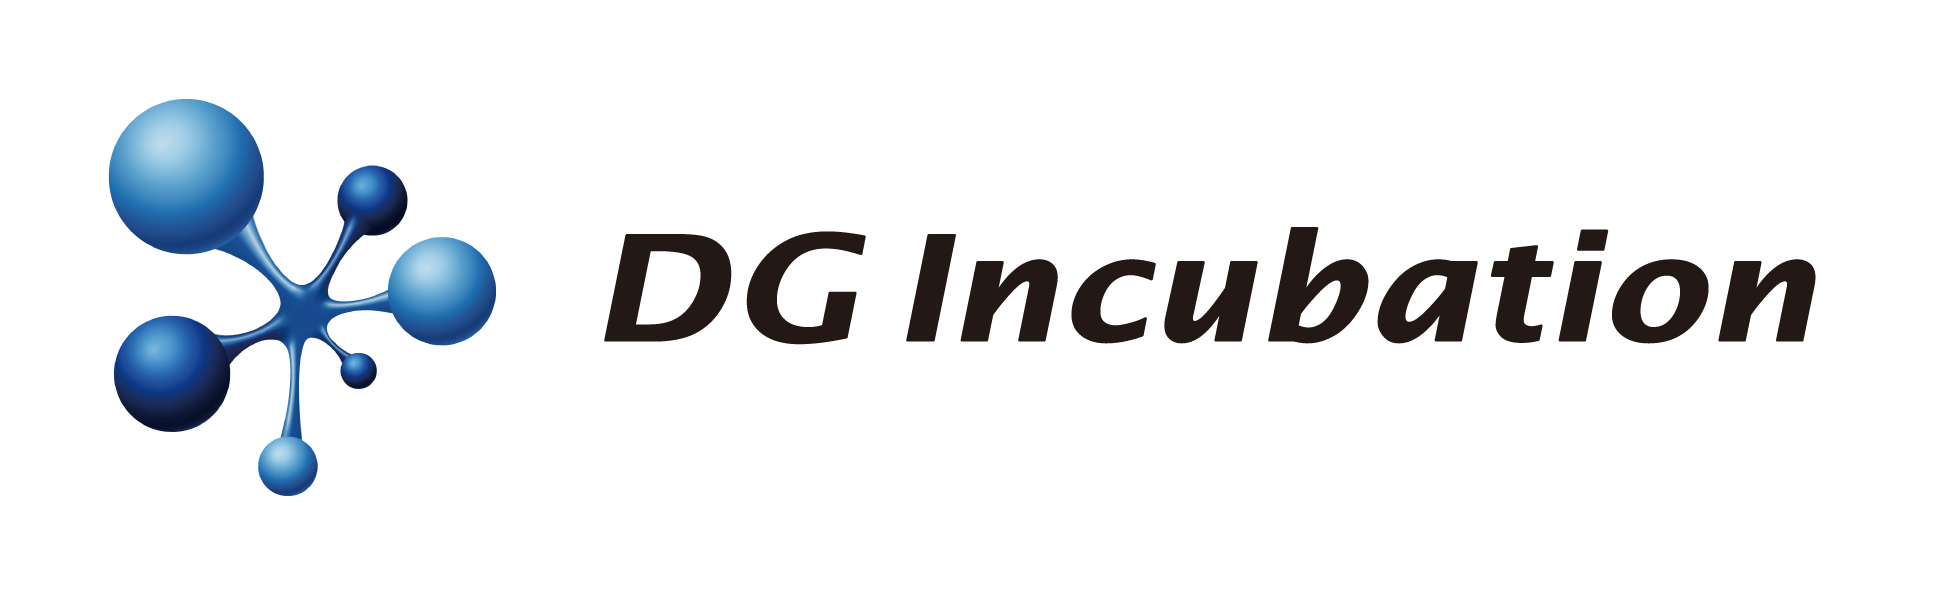 DG-Incubation